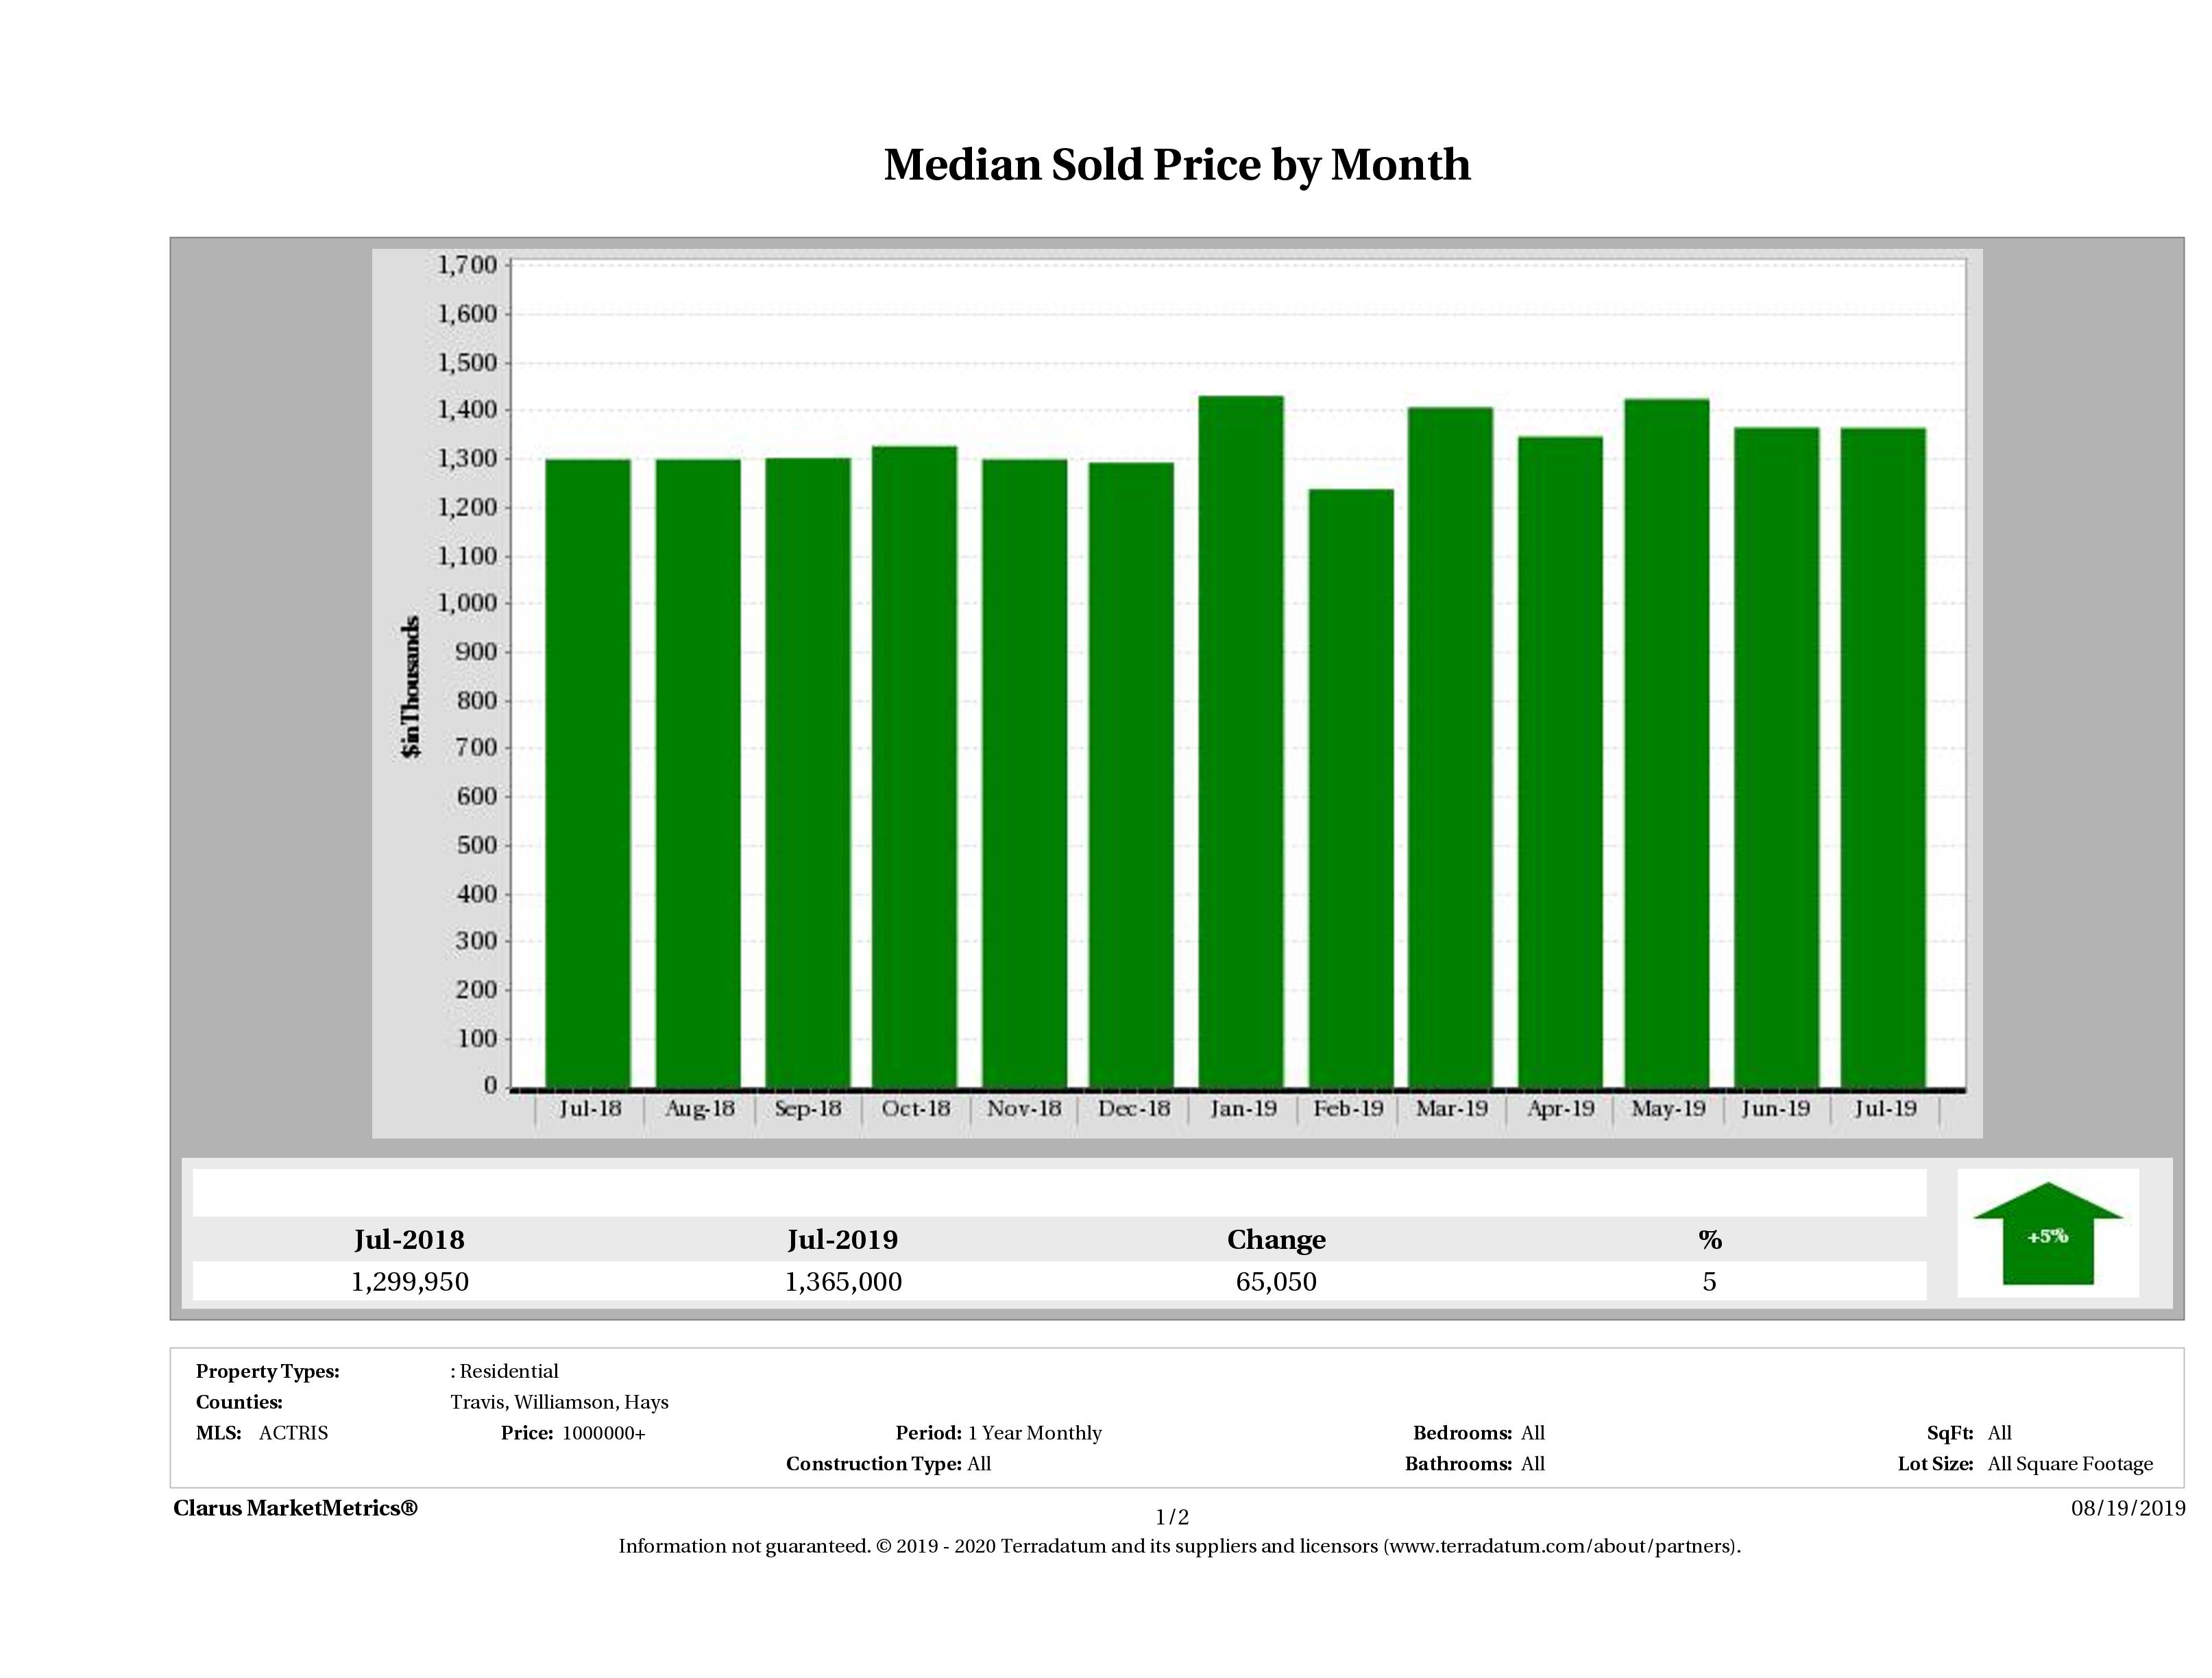 Austin median luxury home price December 2018